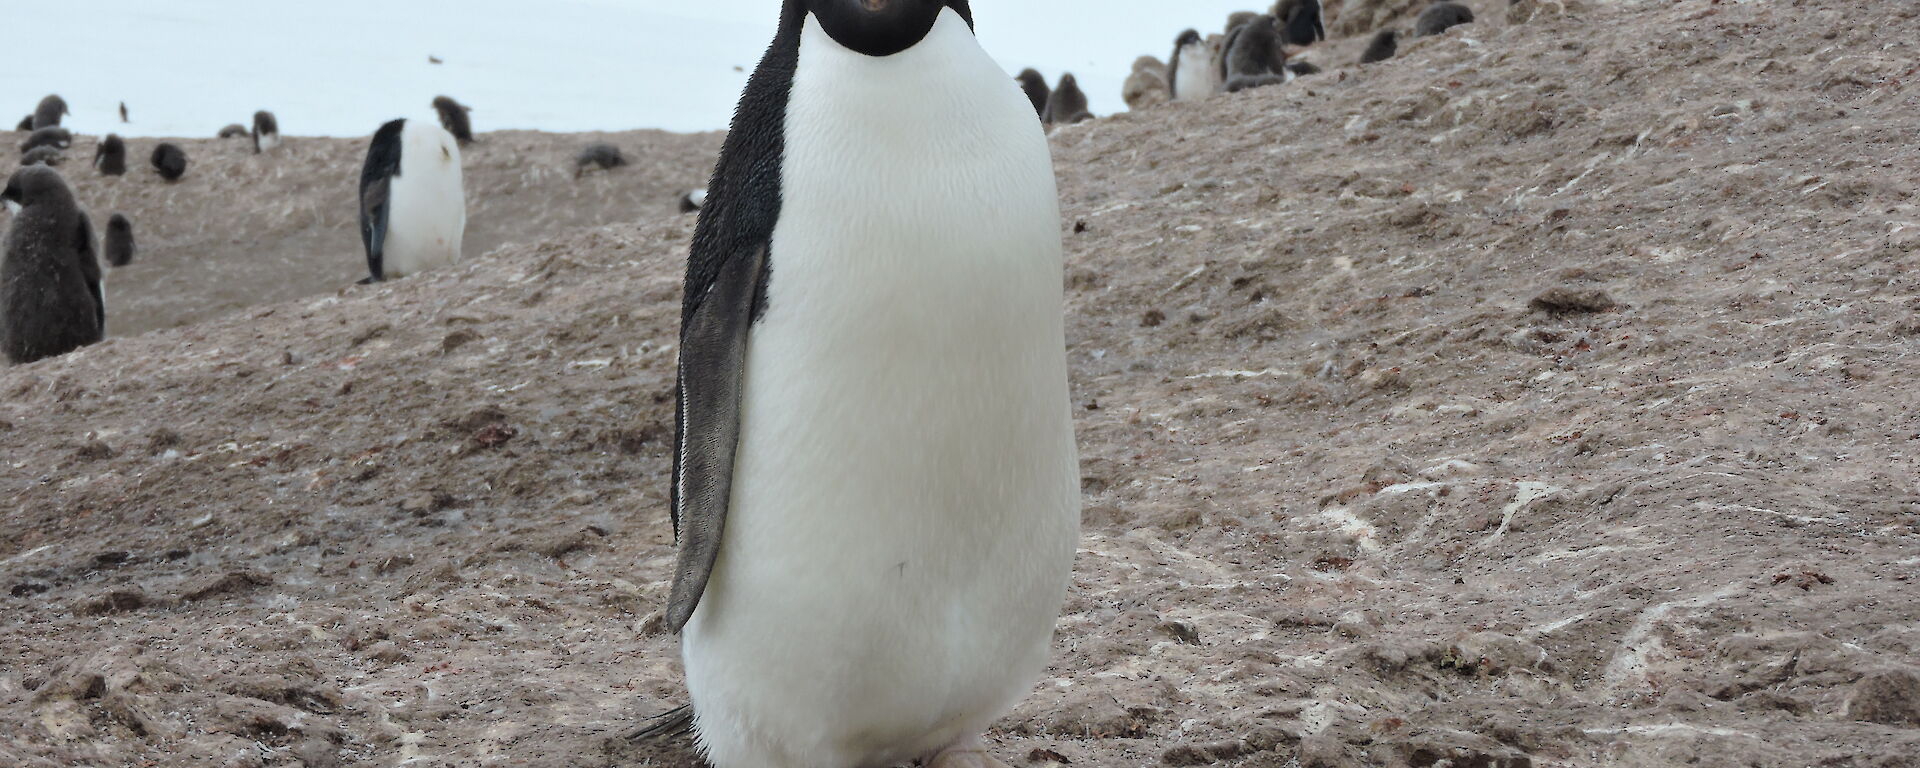 Photo of penguin in ice free area